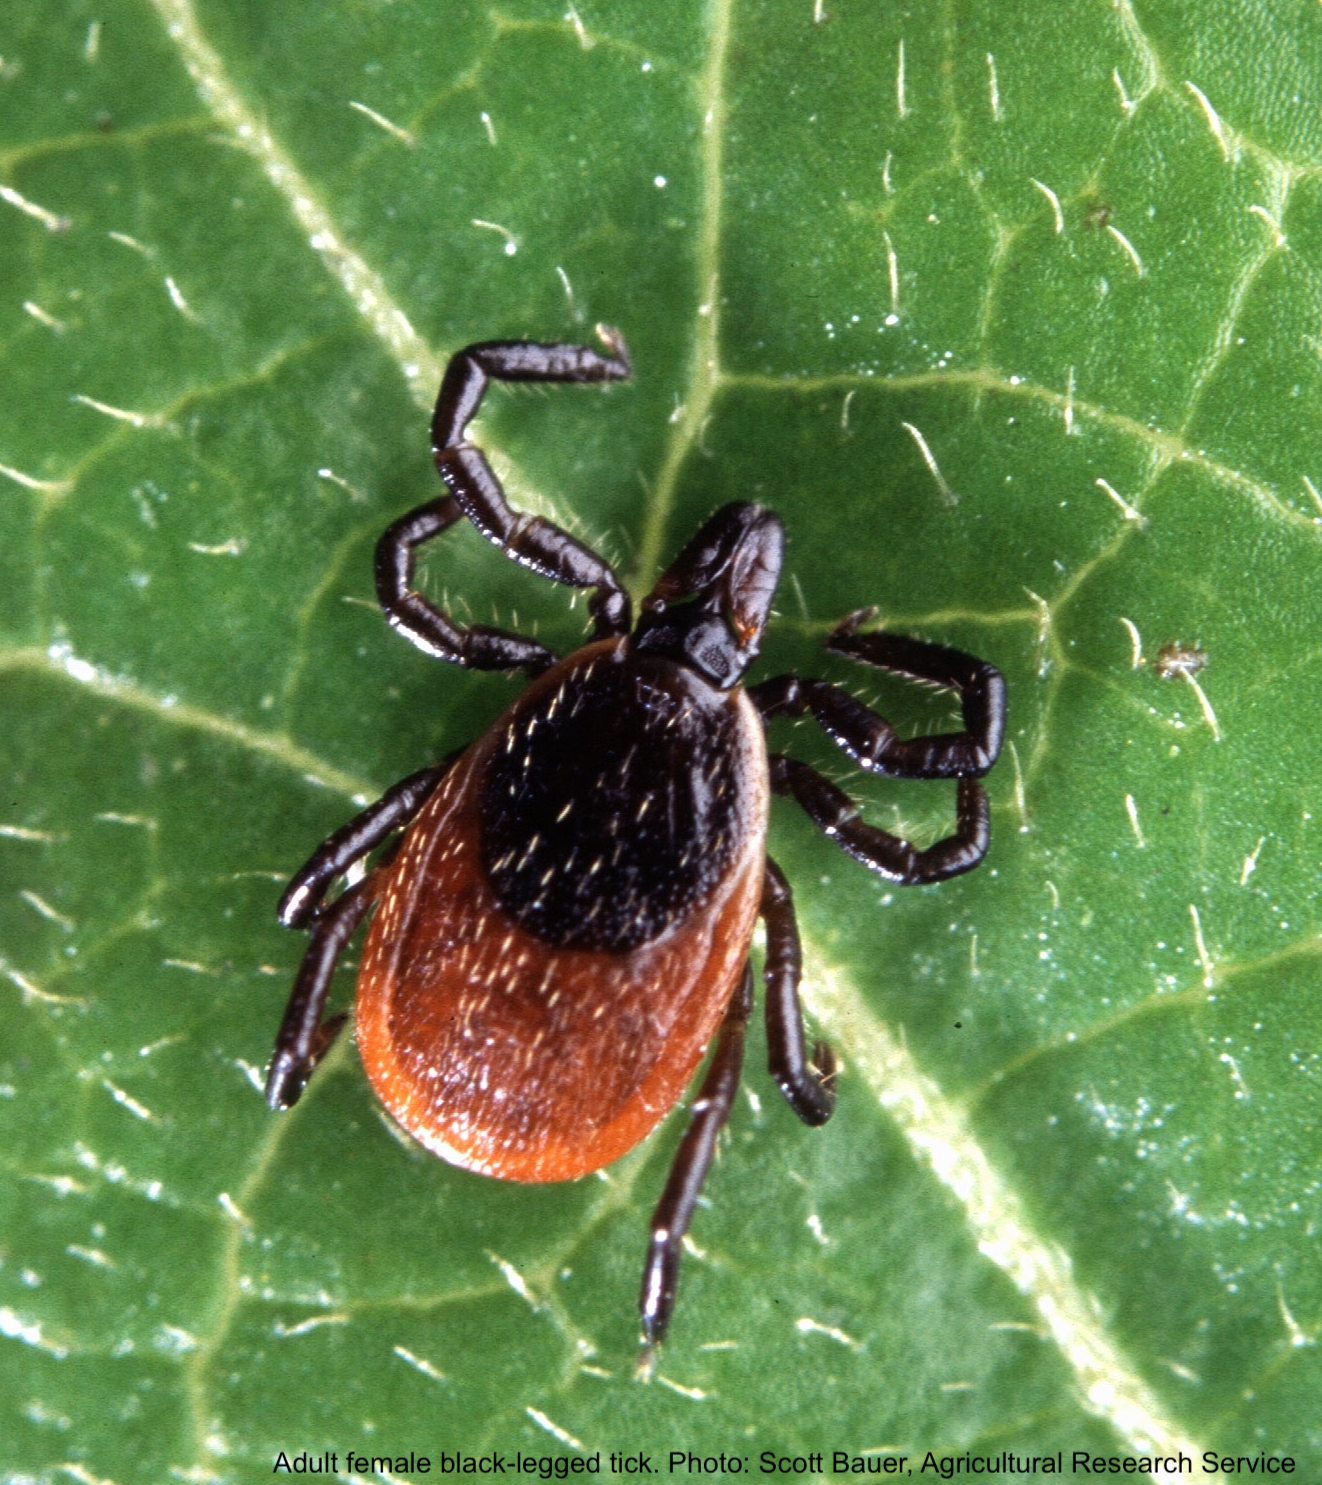 Adult female black-legged tick on a leaf.